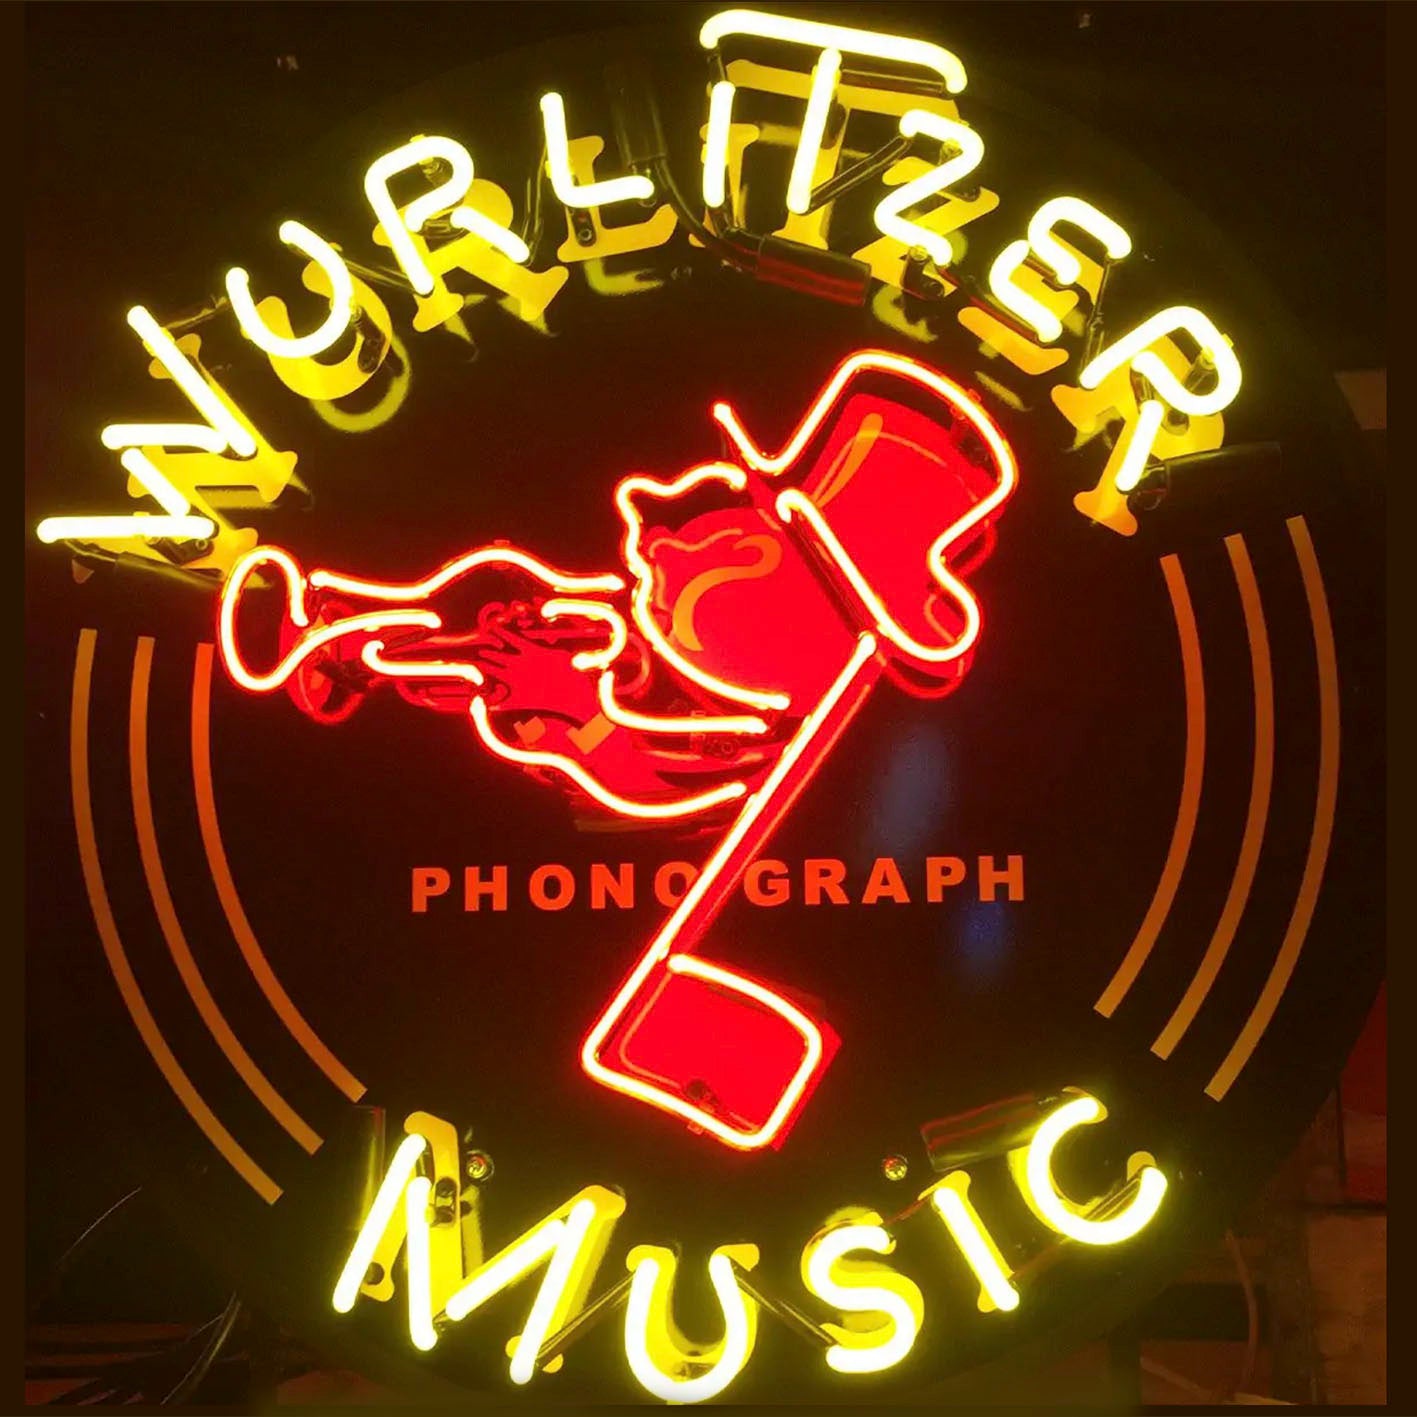 Wurlitzer Music neon sign